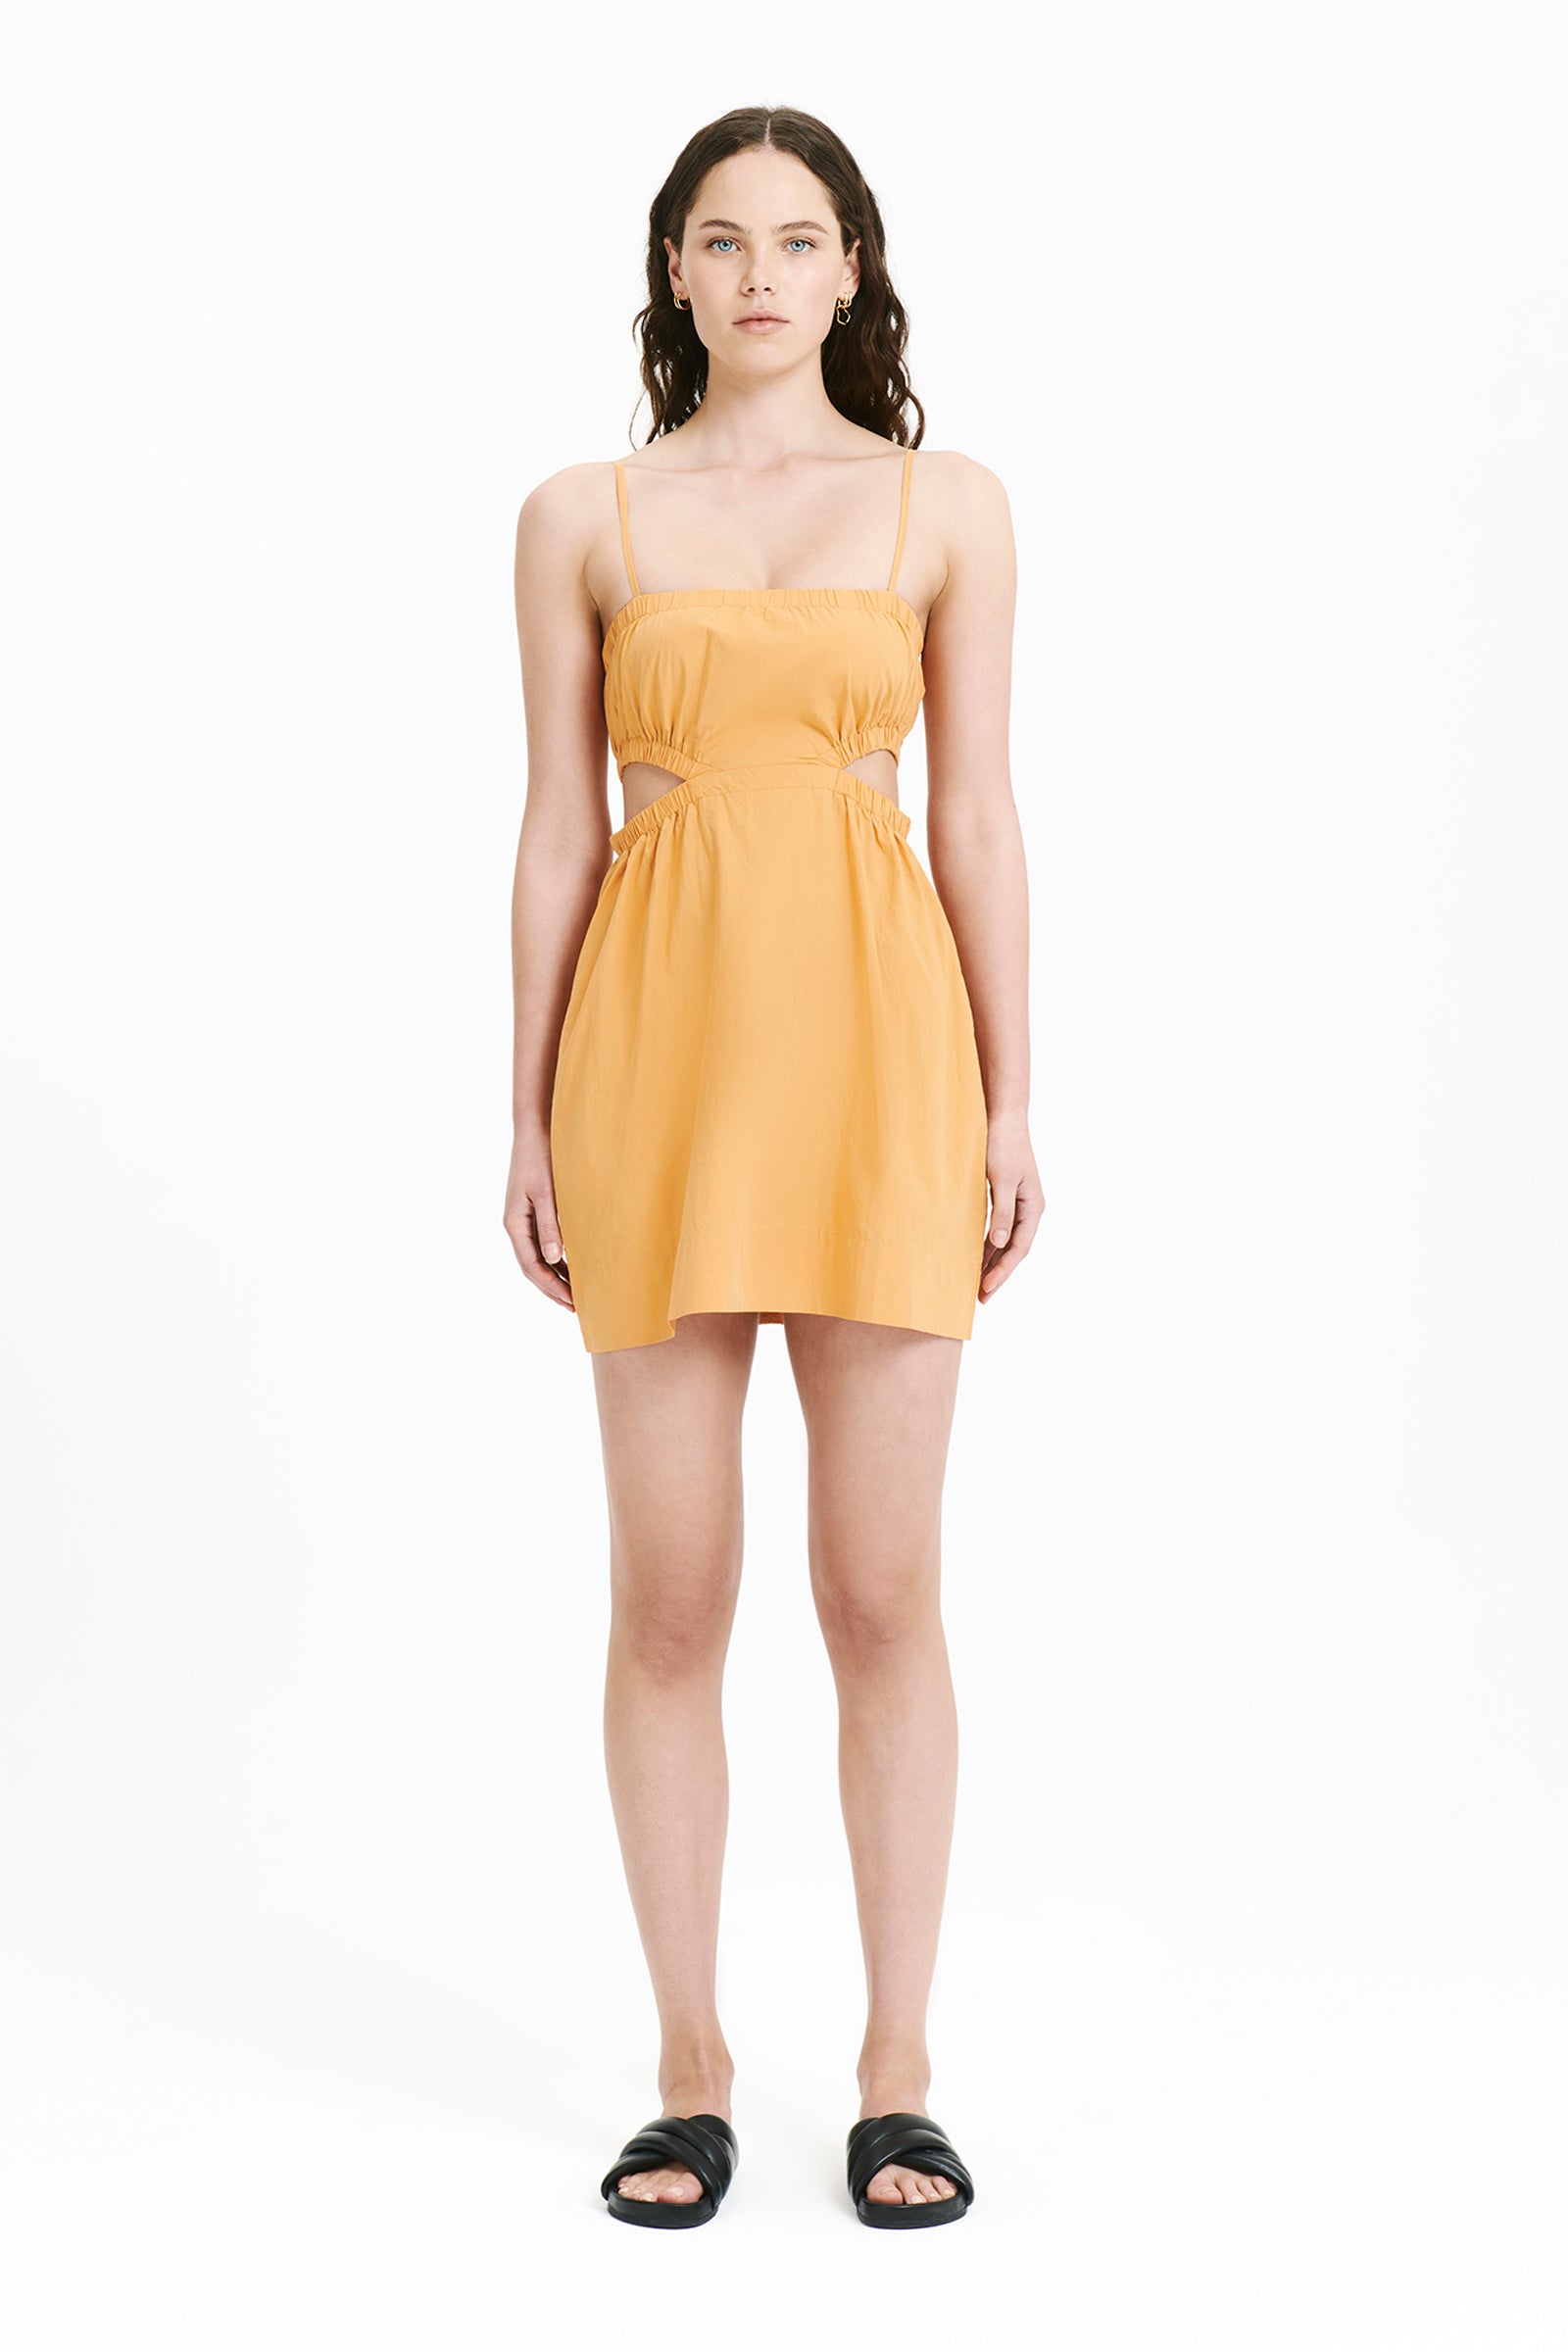 Nude Lucy Oasis Cut Out Mini Dress In an Orange Mandarin Colour